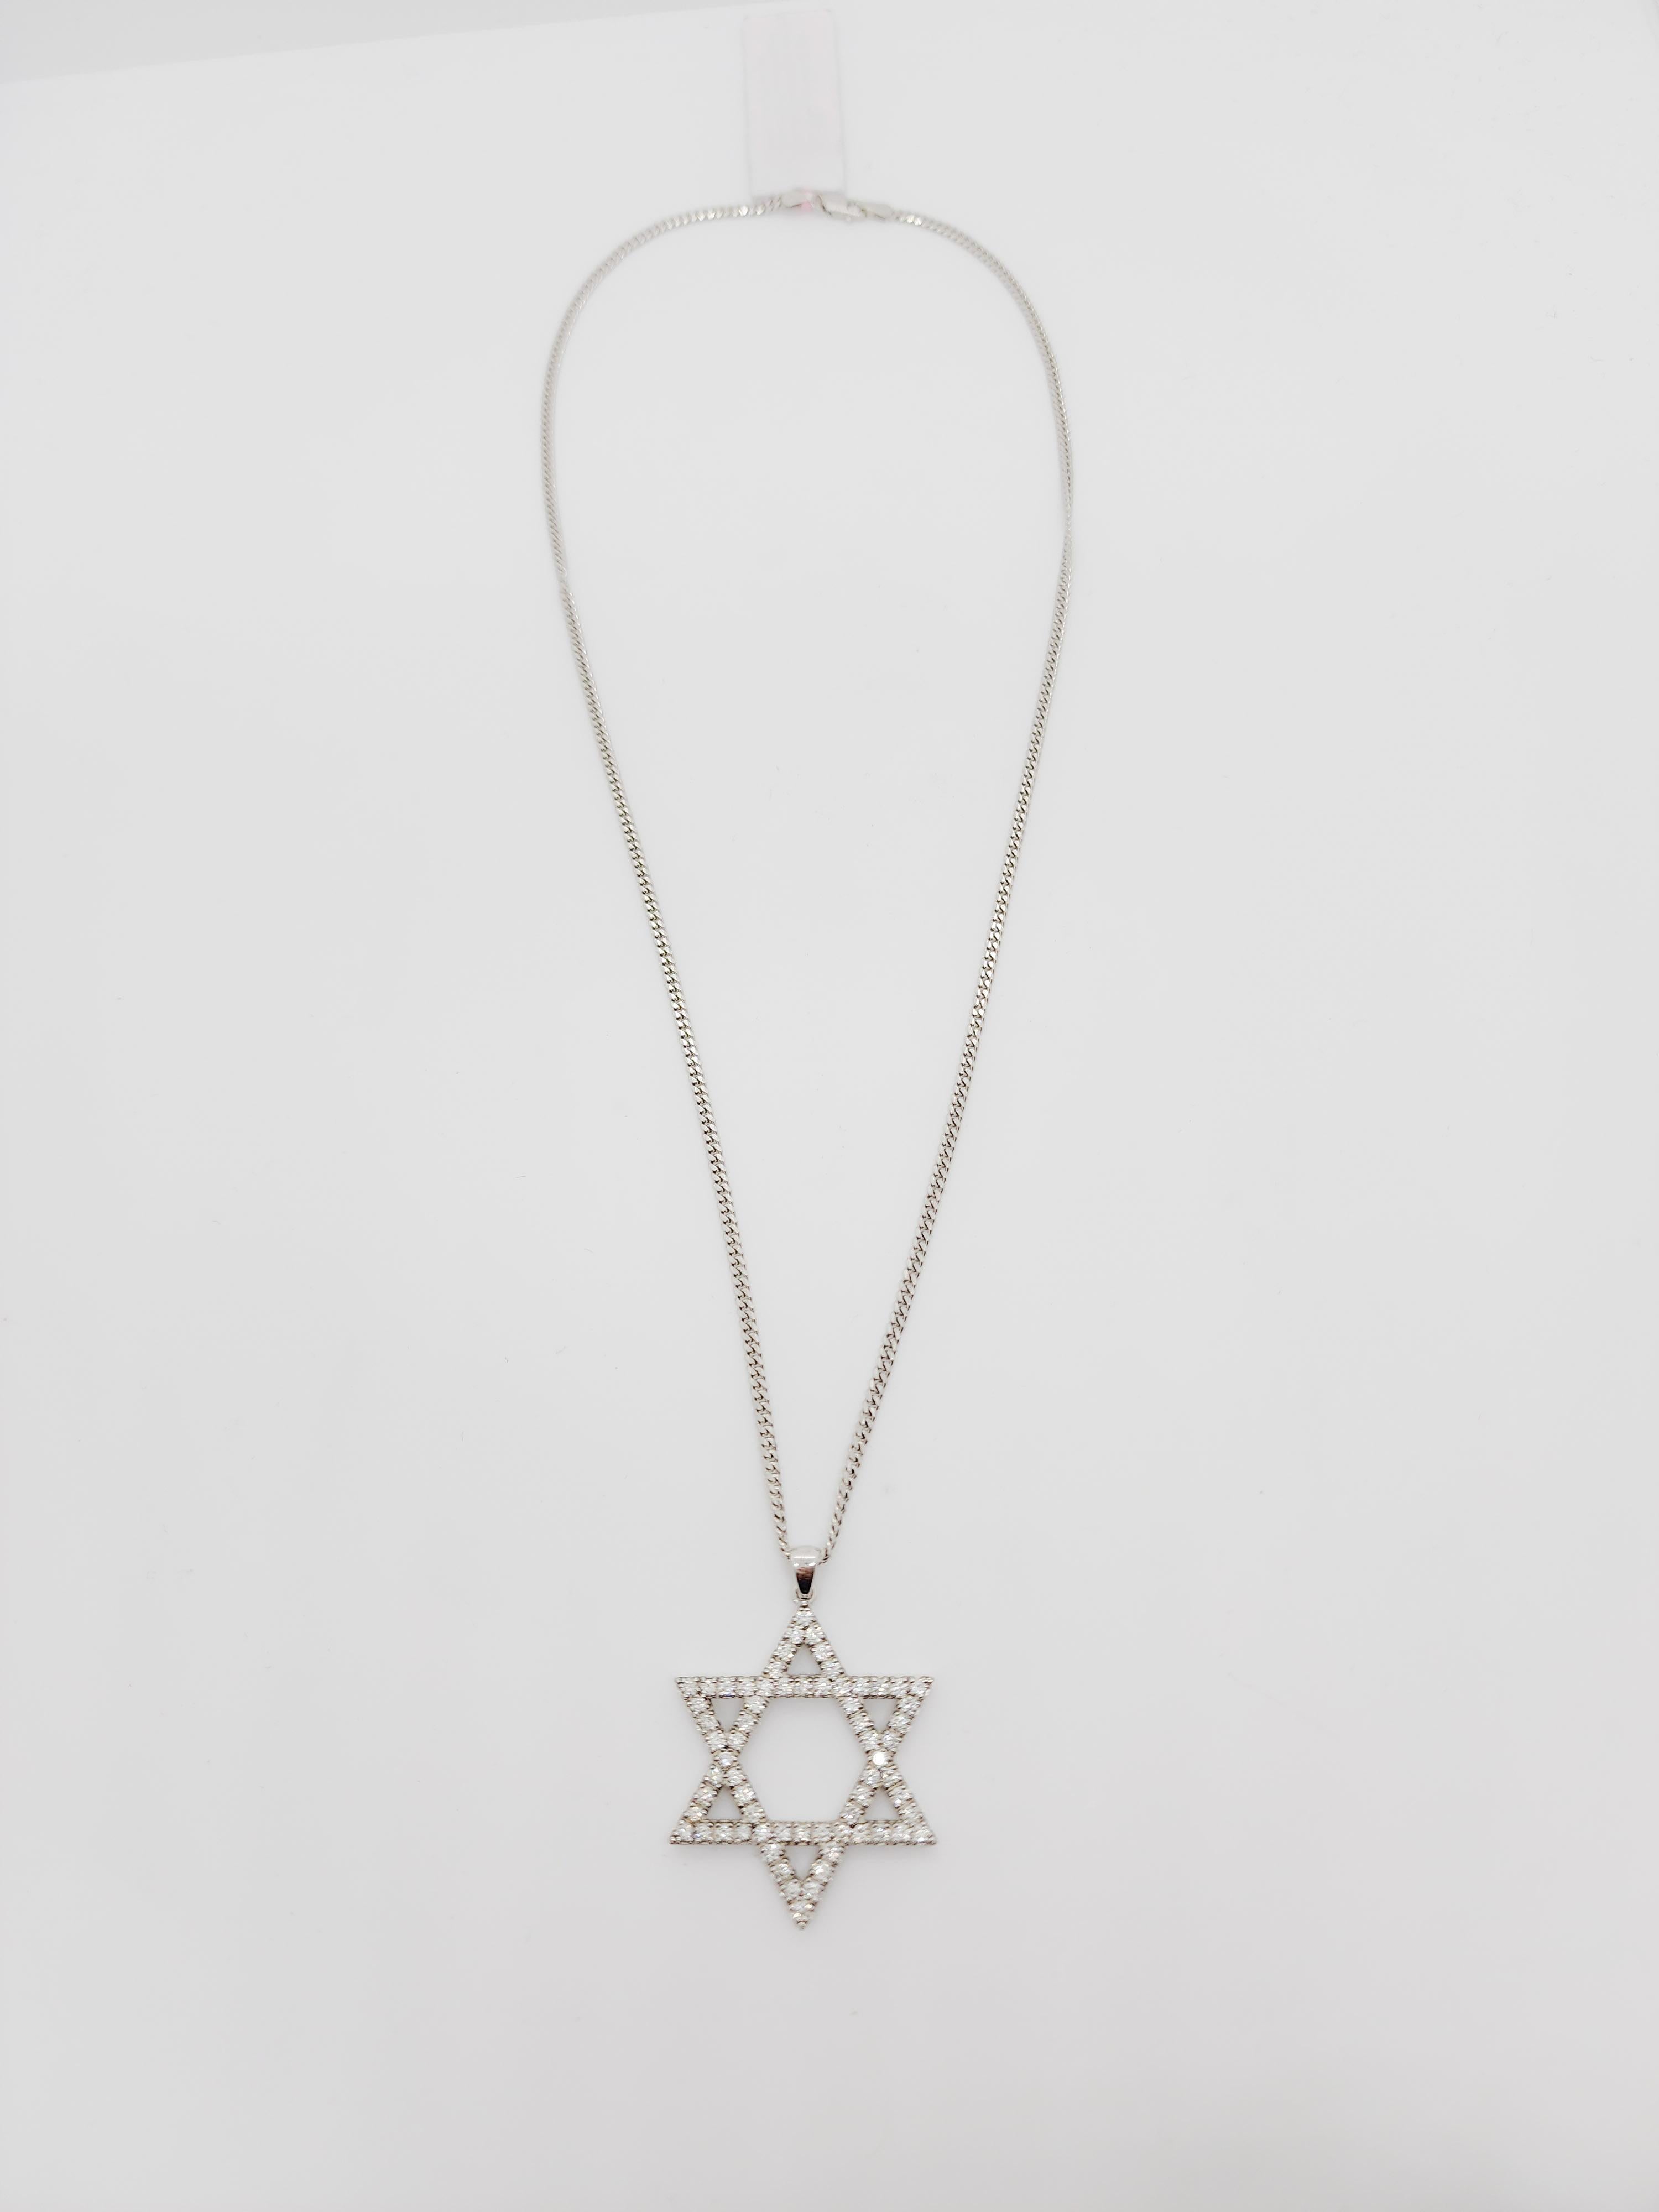 Women's or Men's White Diamond Star of David Pendant Necklace in 14k White Gold For Sale